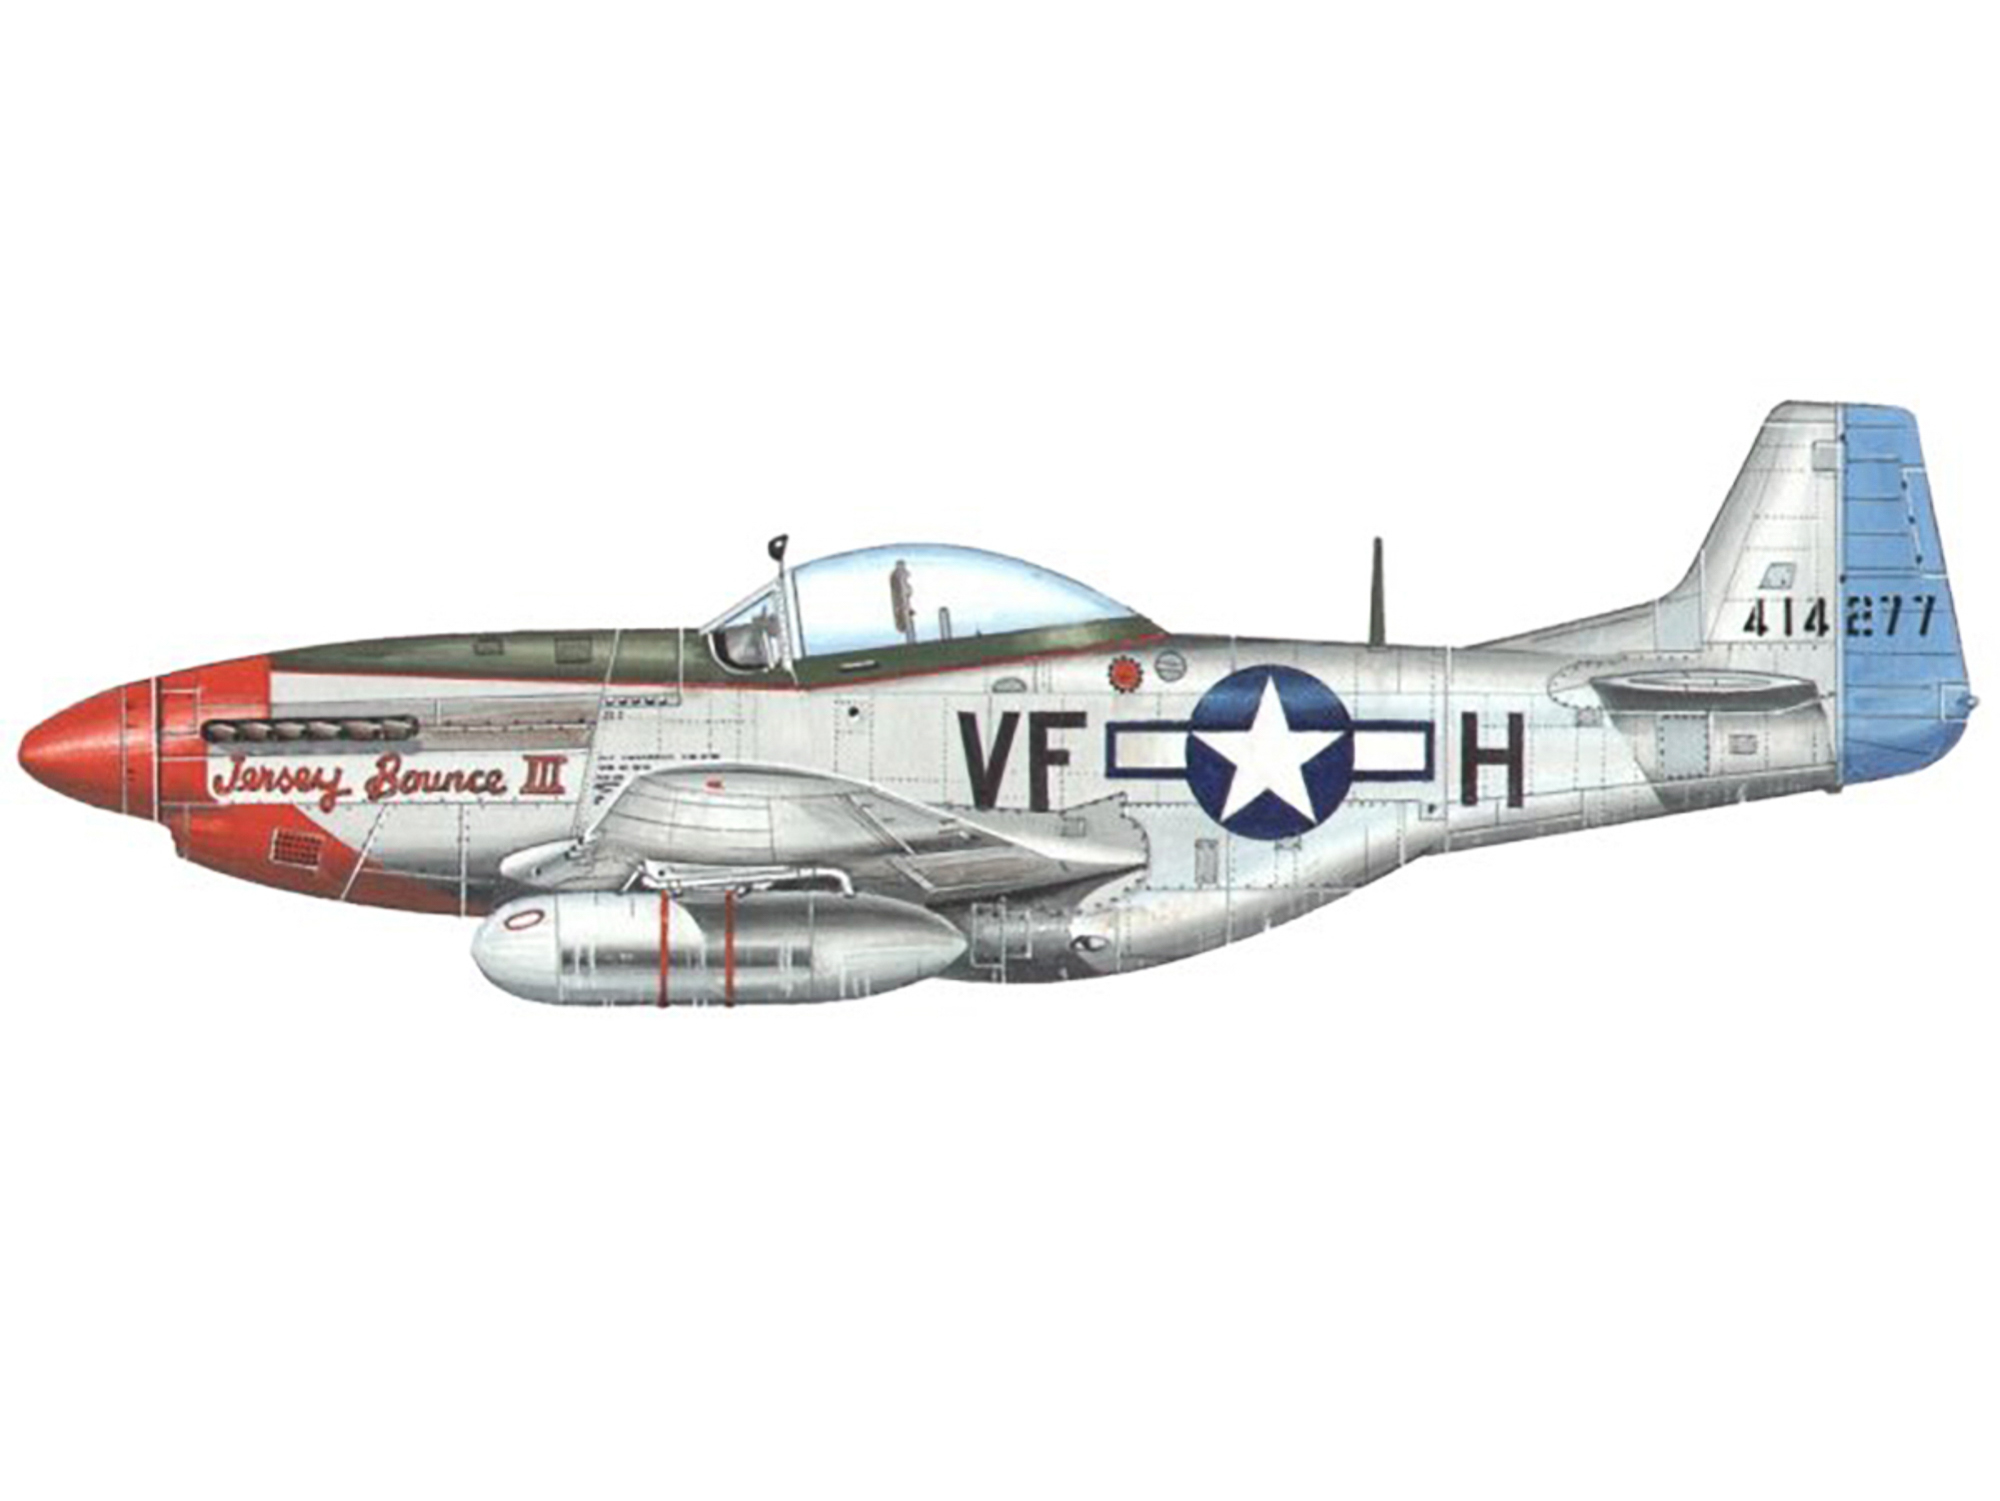 P-51D – Jersey Bounce III – 44-14277